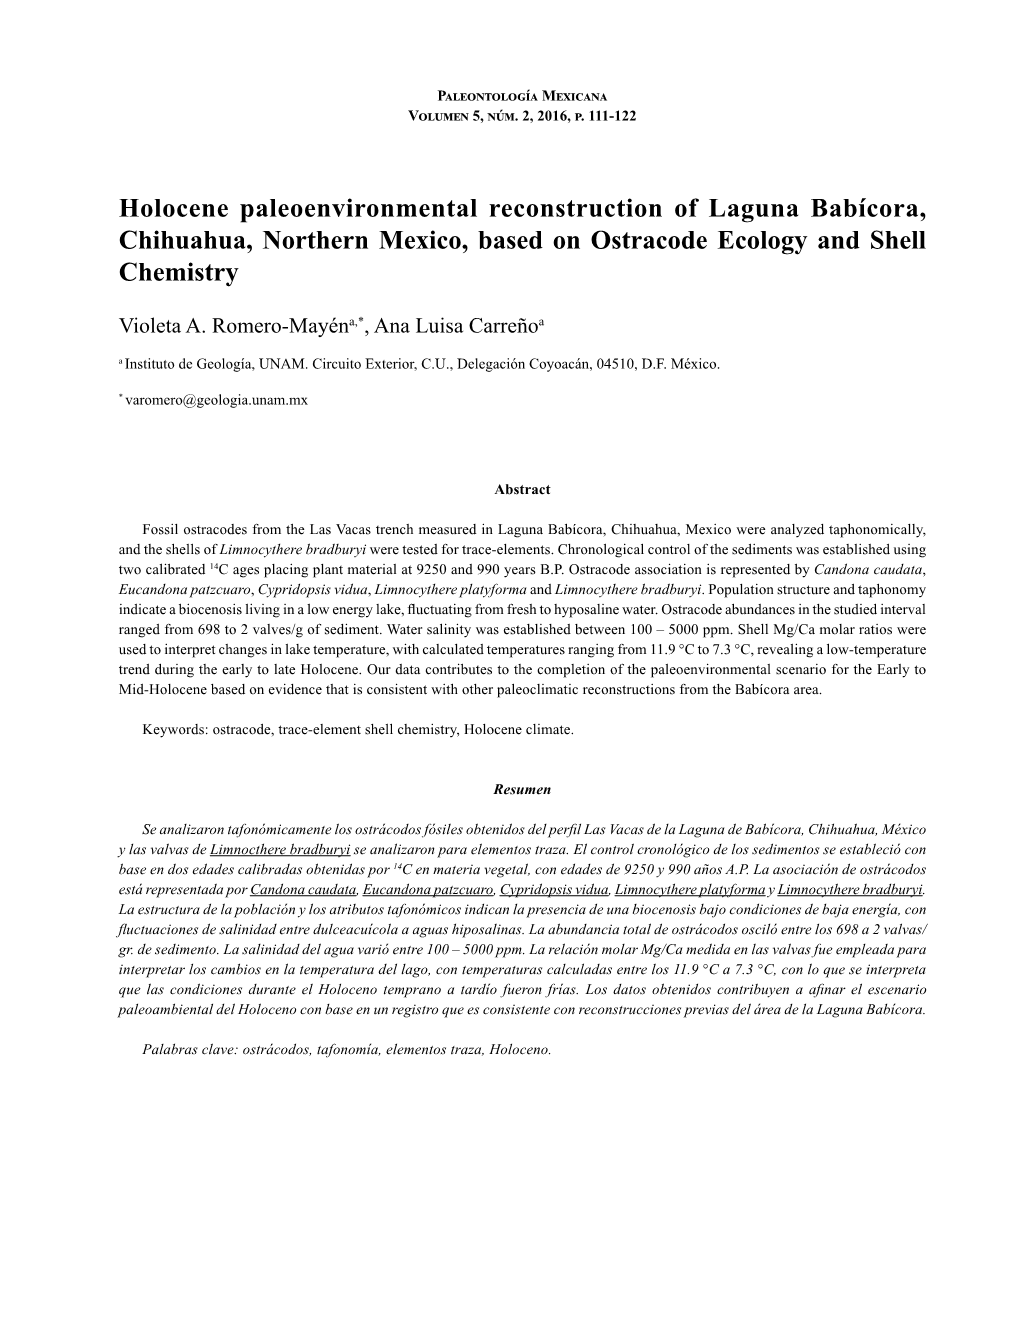 Holocene Paleoenvironmental Reconstruction of Laguna Babícora 111 Paleontología Mexicana Volumen 5, Núm